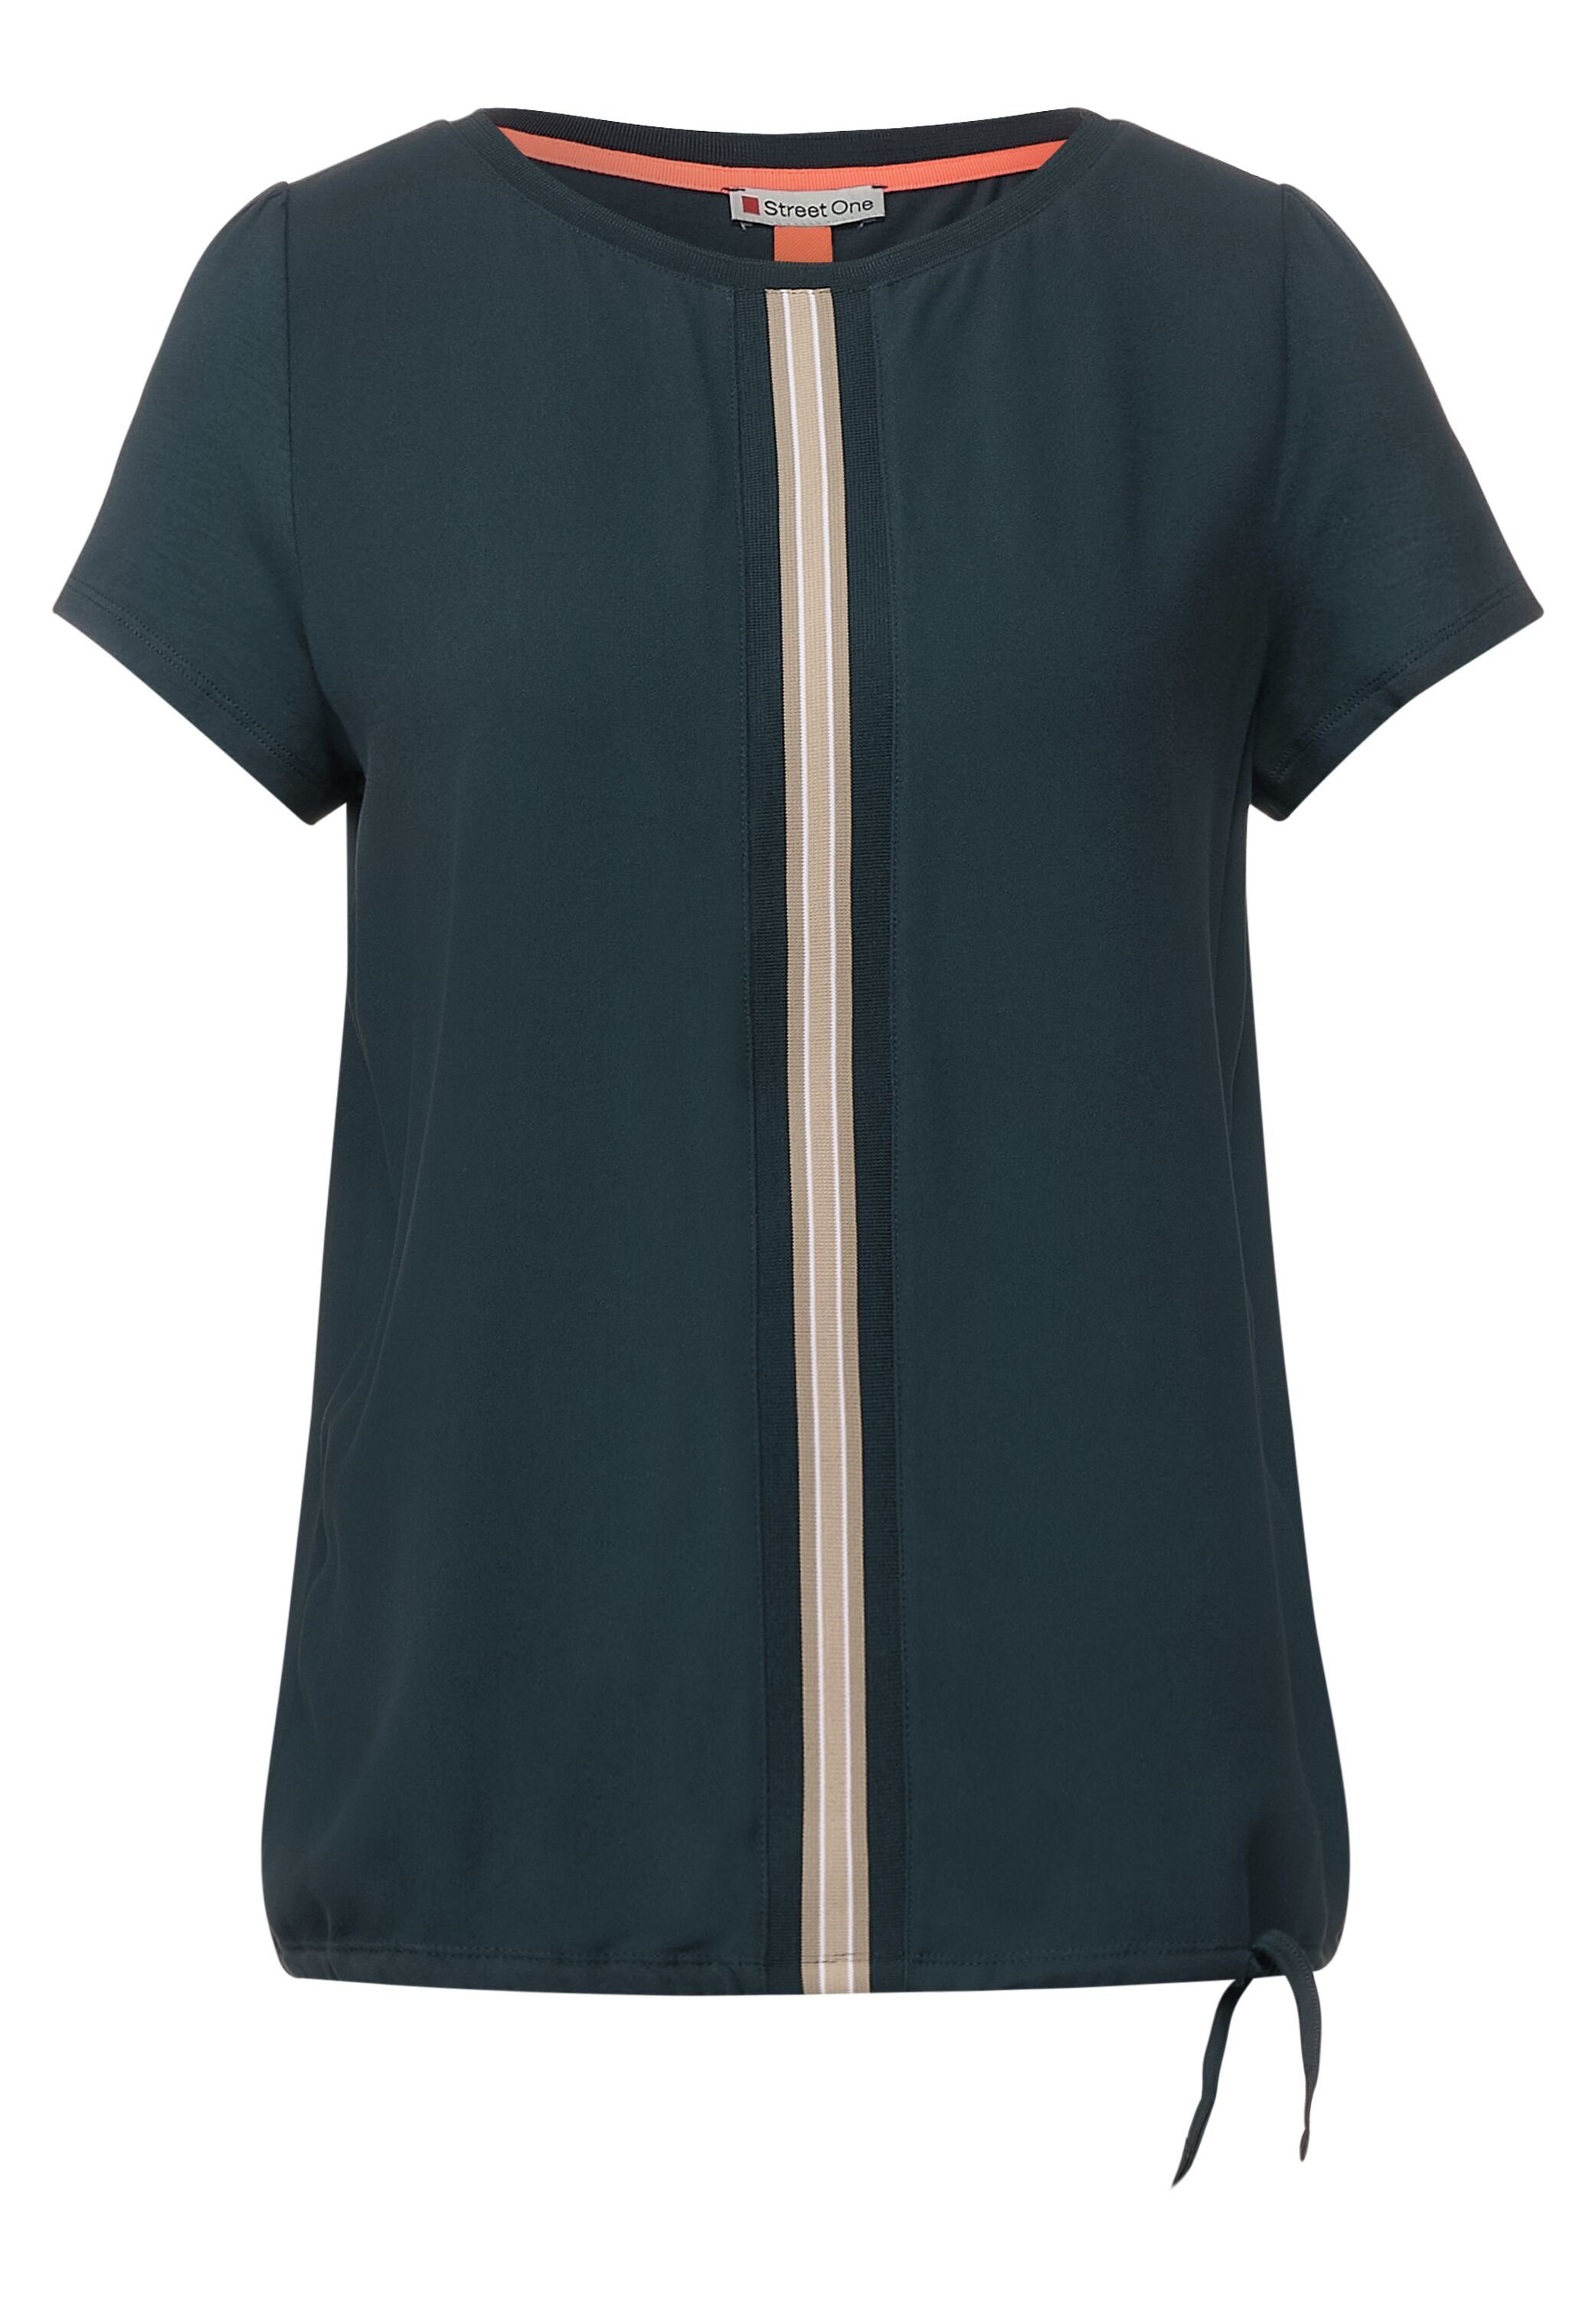 T-Shirt Rippstrickdetails cool ONE STREET vintage mit green